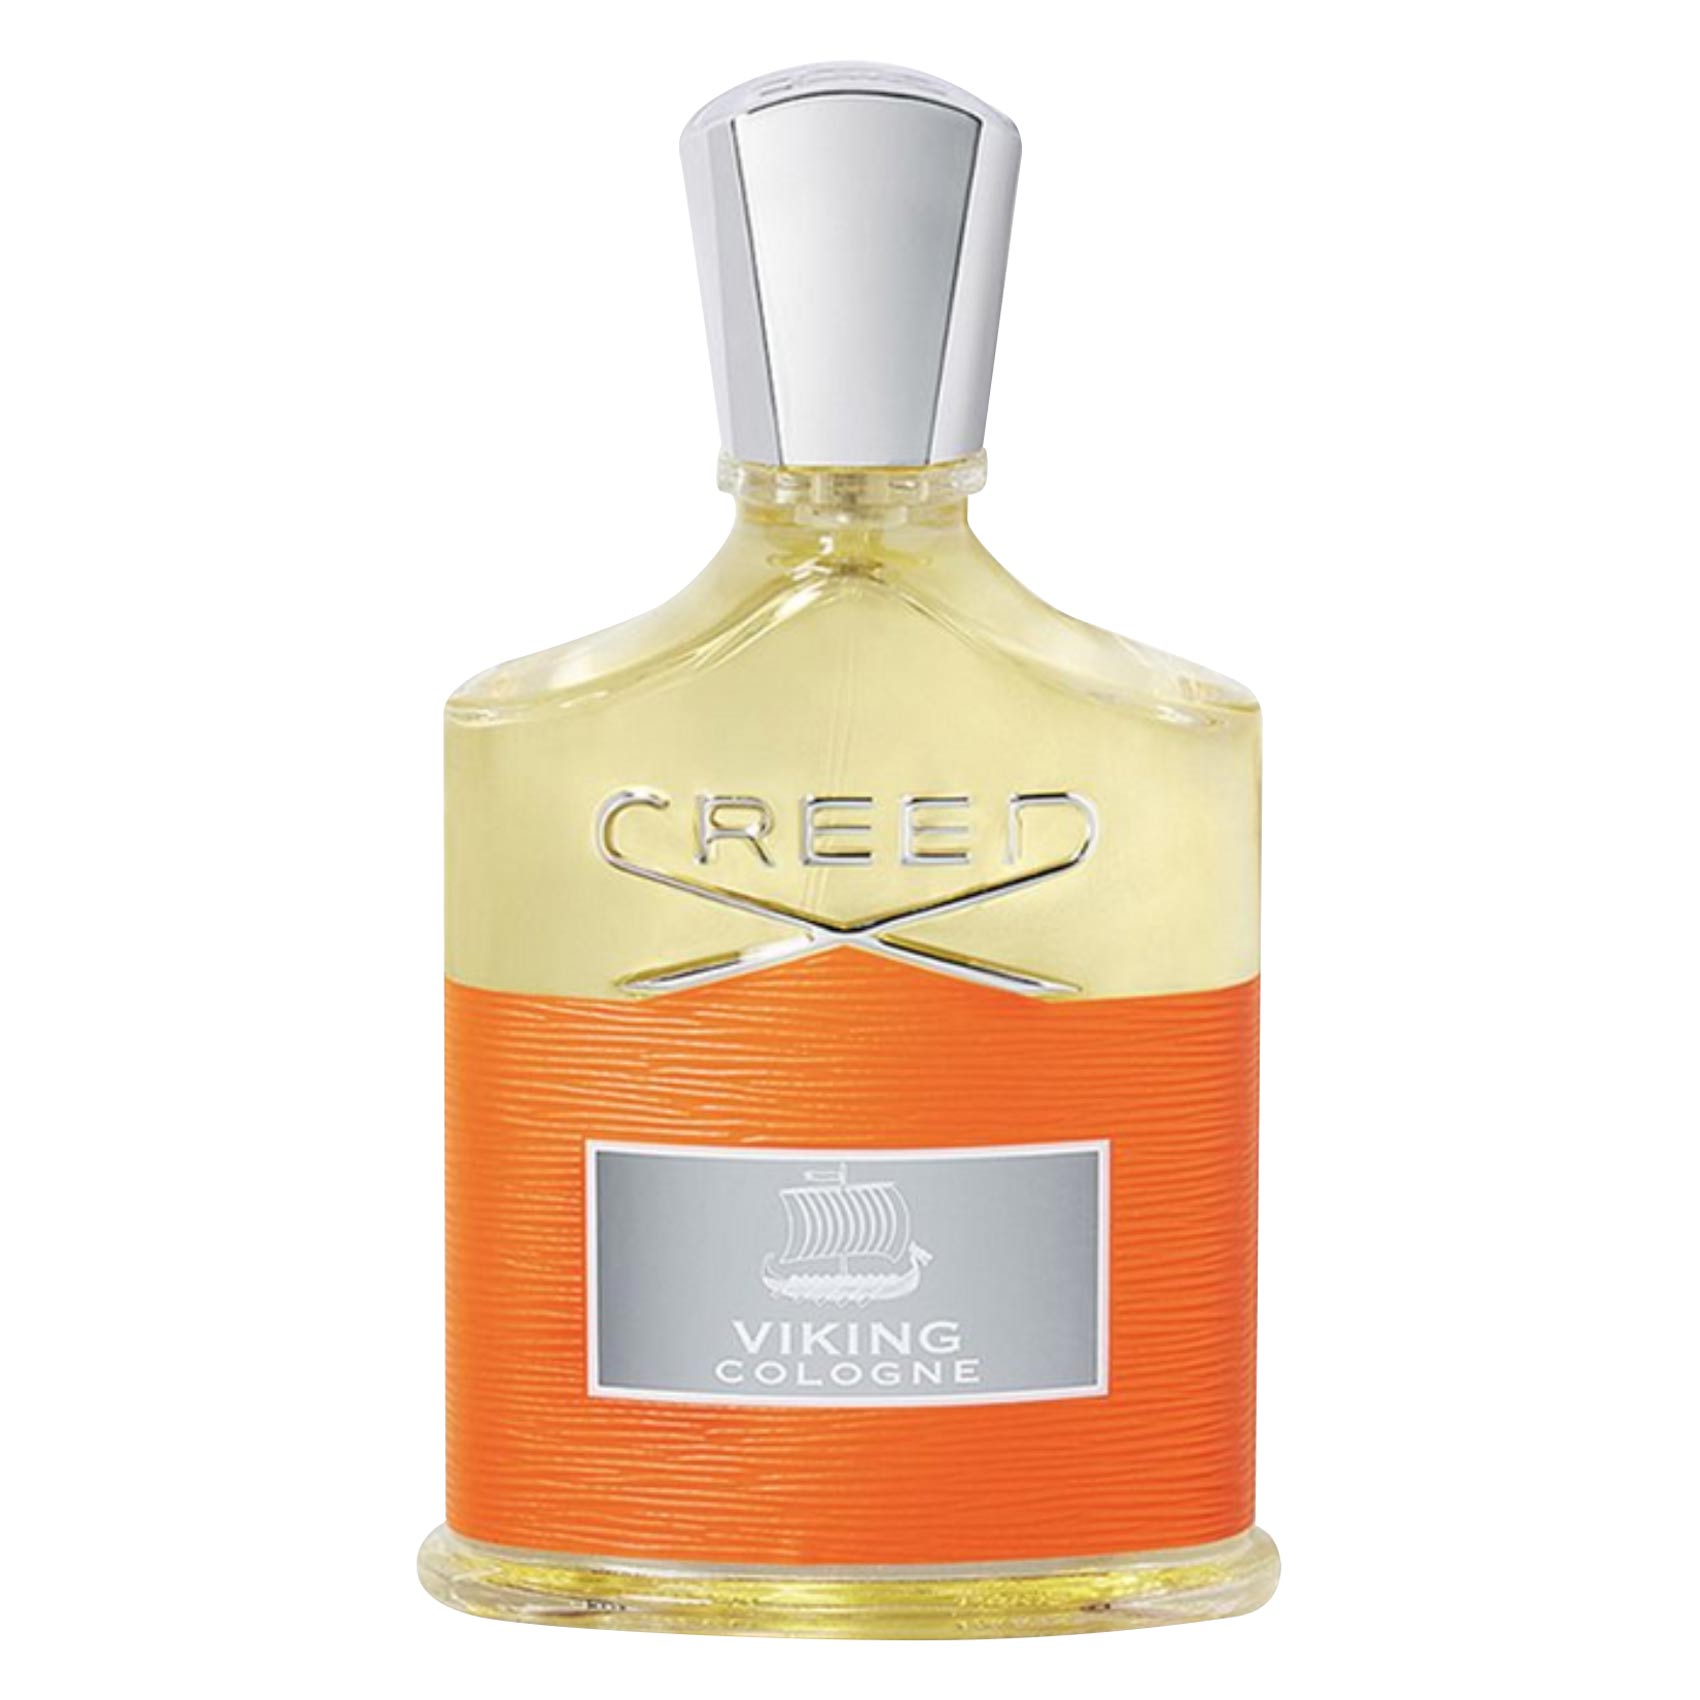 Creed Viking Cologne Perfume 100ml